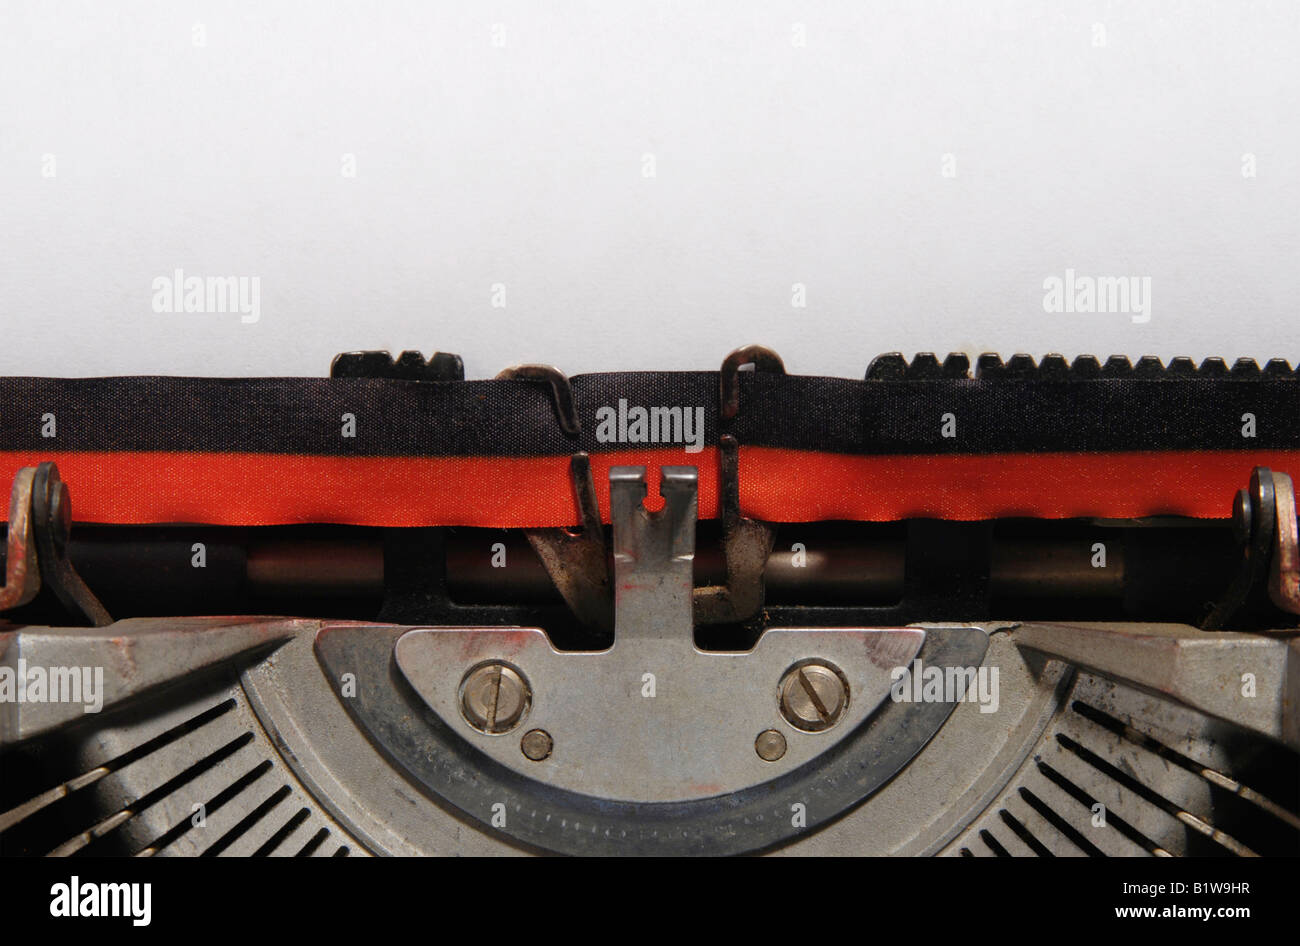 Cinta de máquina de escribir fotografías e imágenes de alta resolución -  Alamy